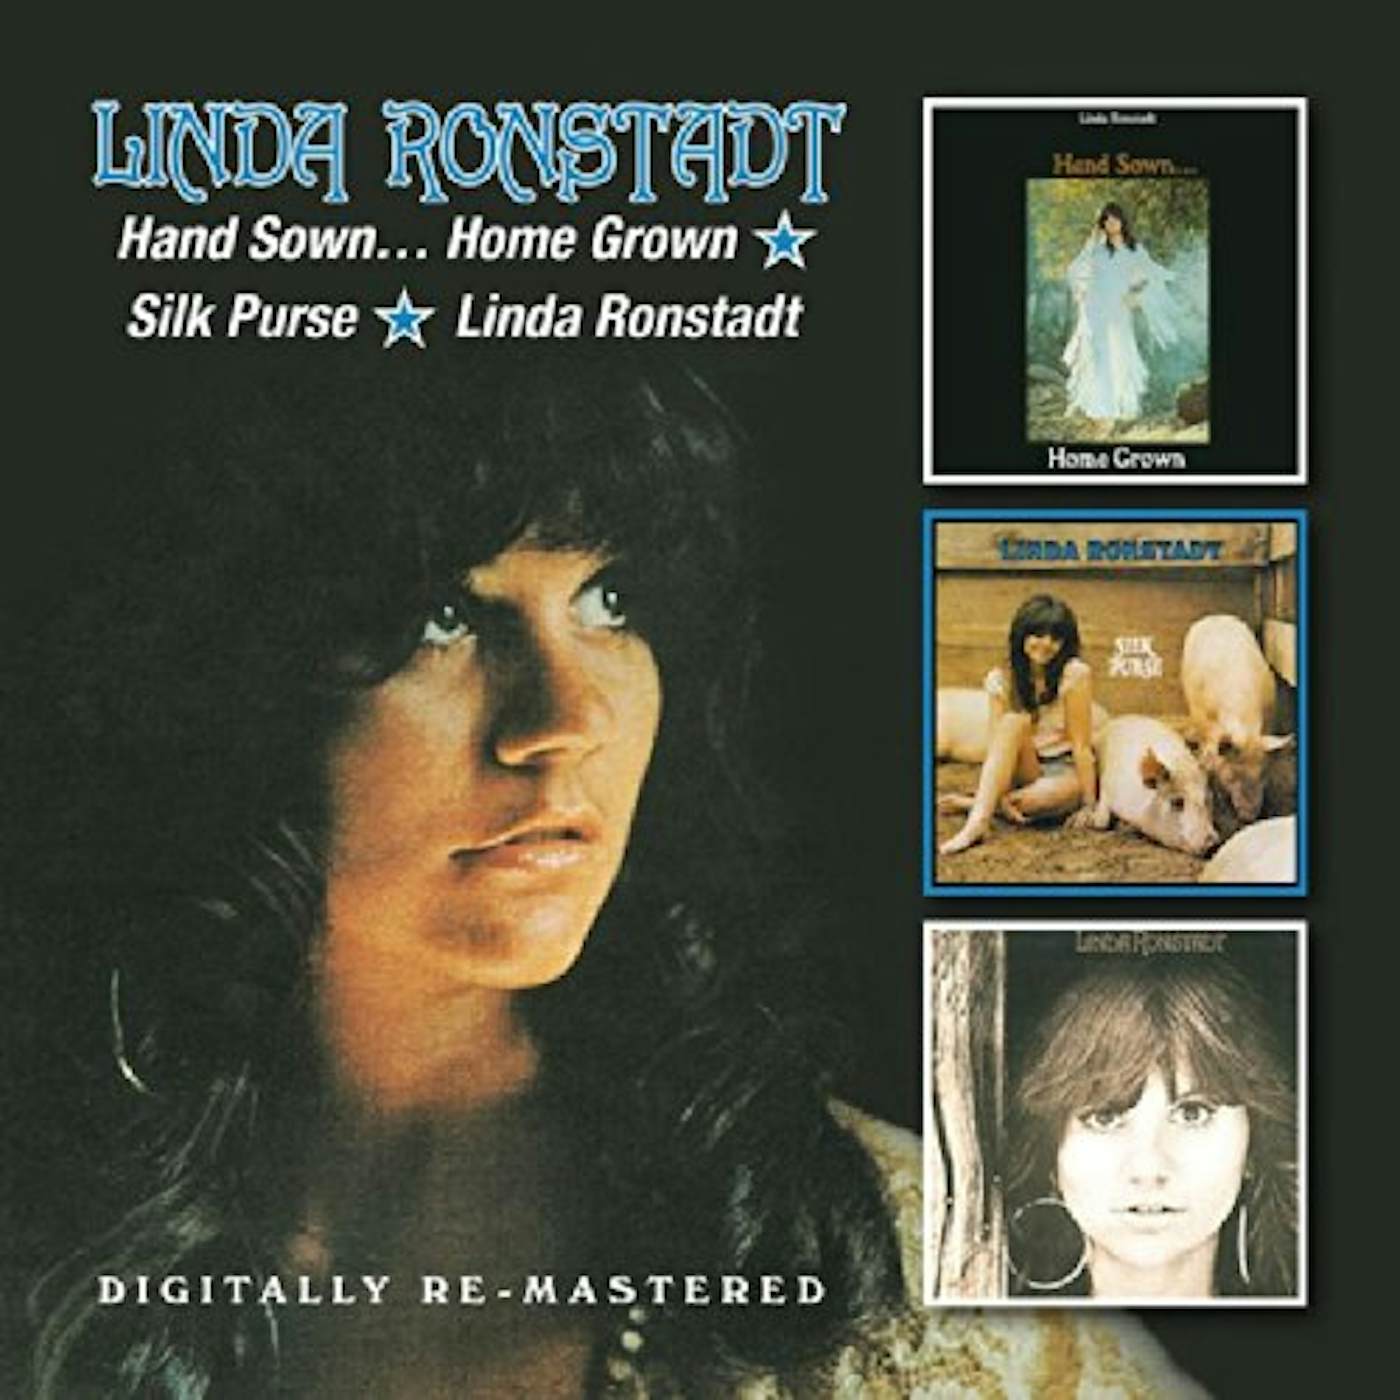 HAND SOWN HOME GROWN / SILK PURSE / LINDA RONSTADT CD